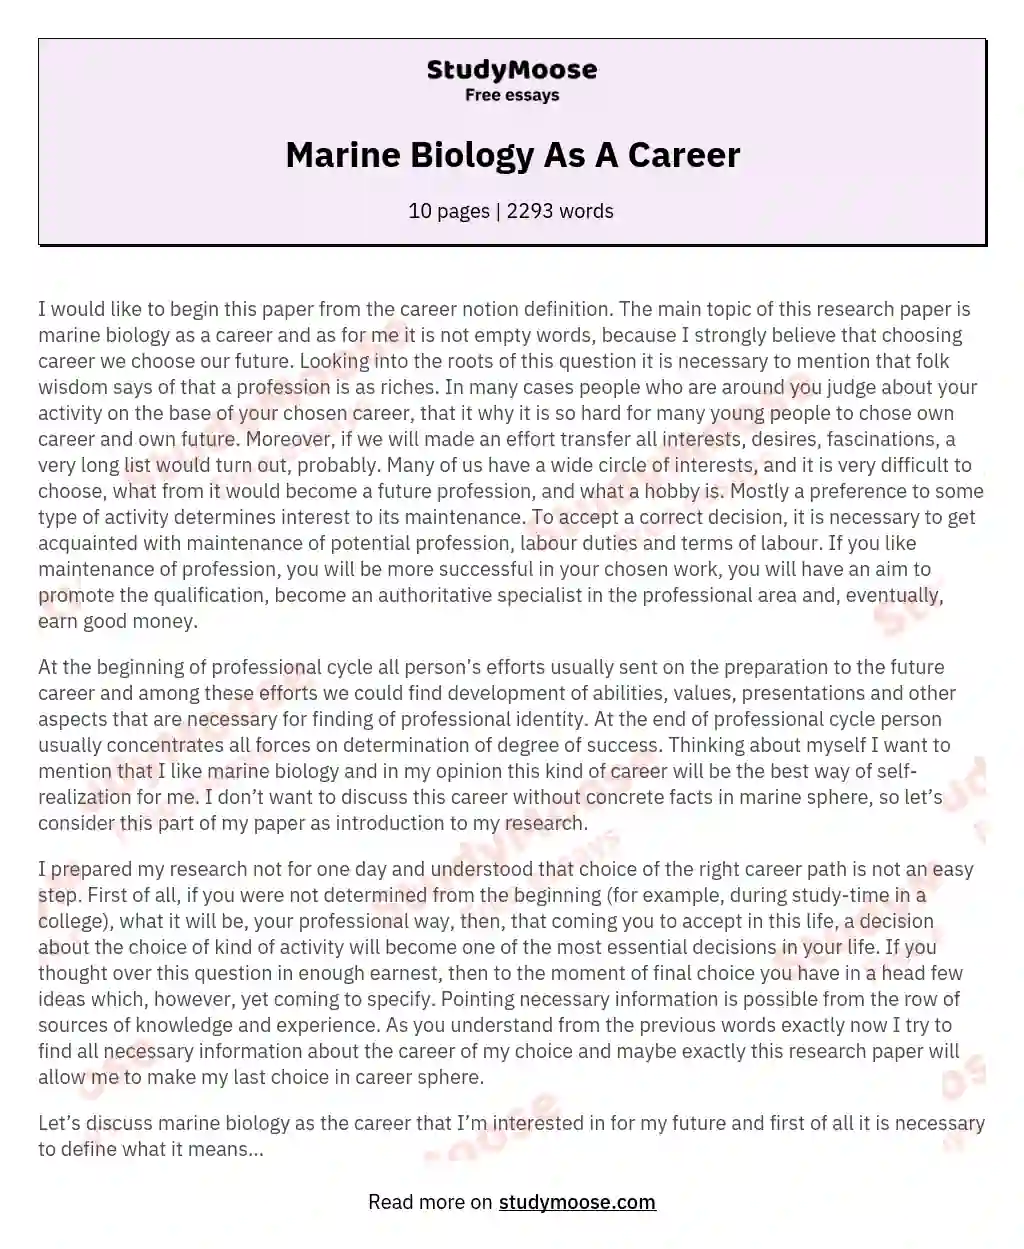 Marine Biology As A Career essay